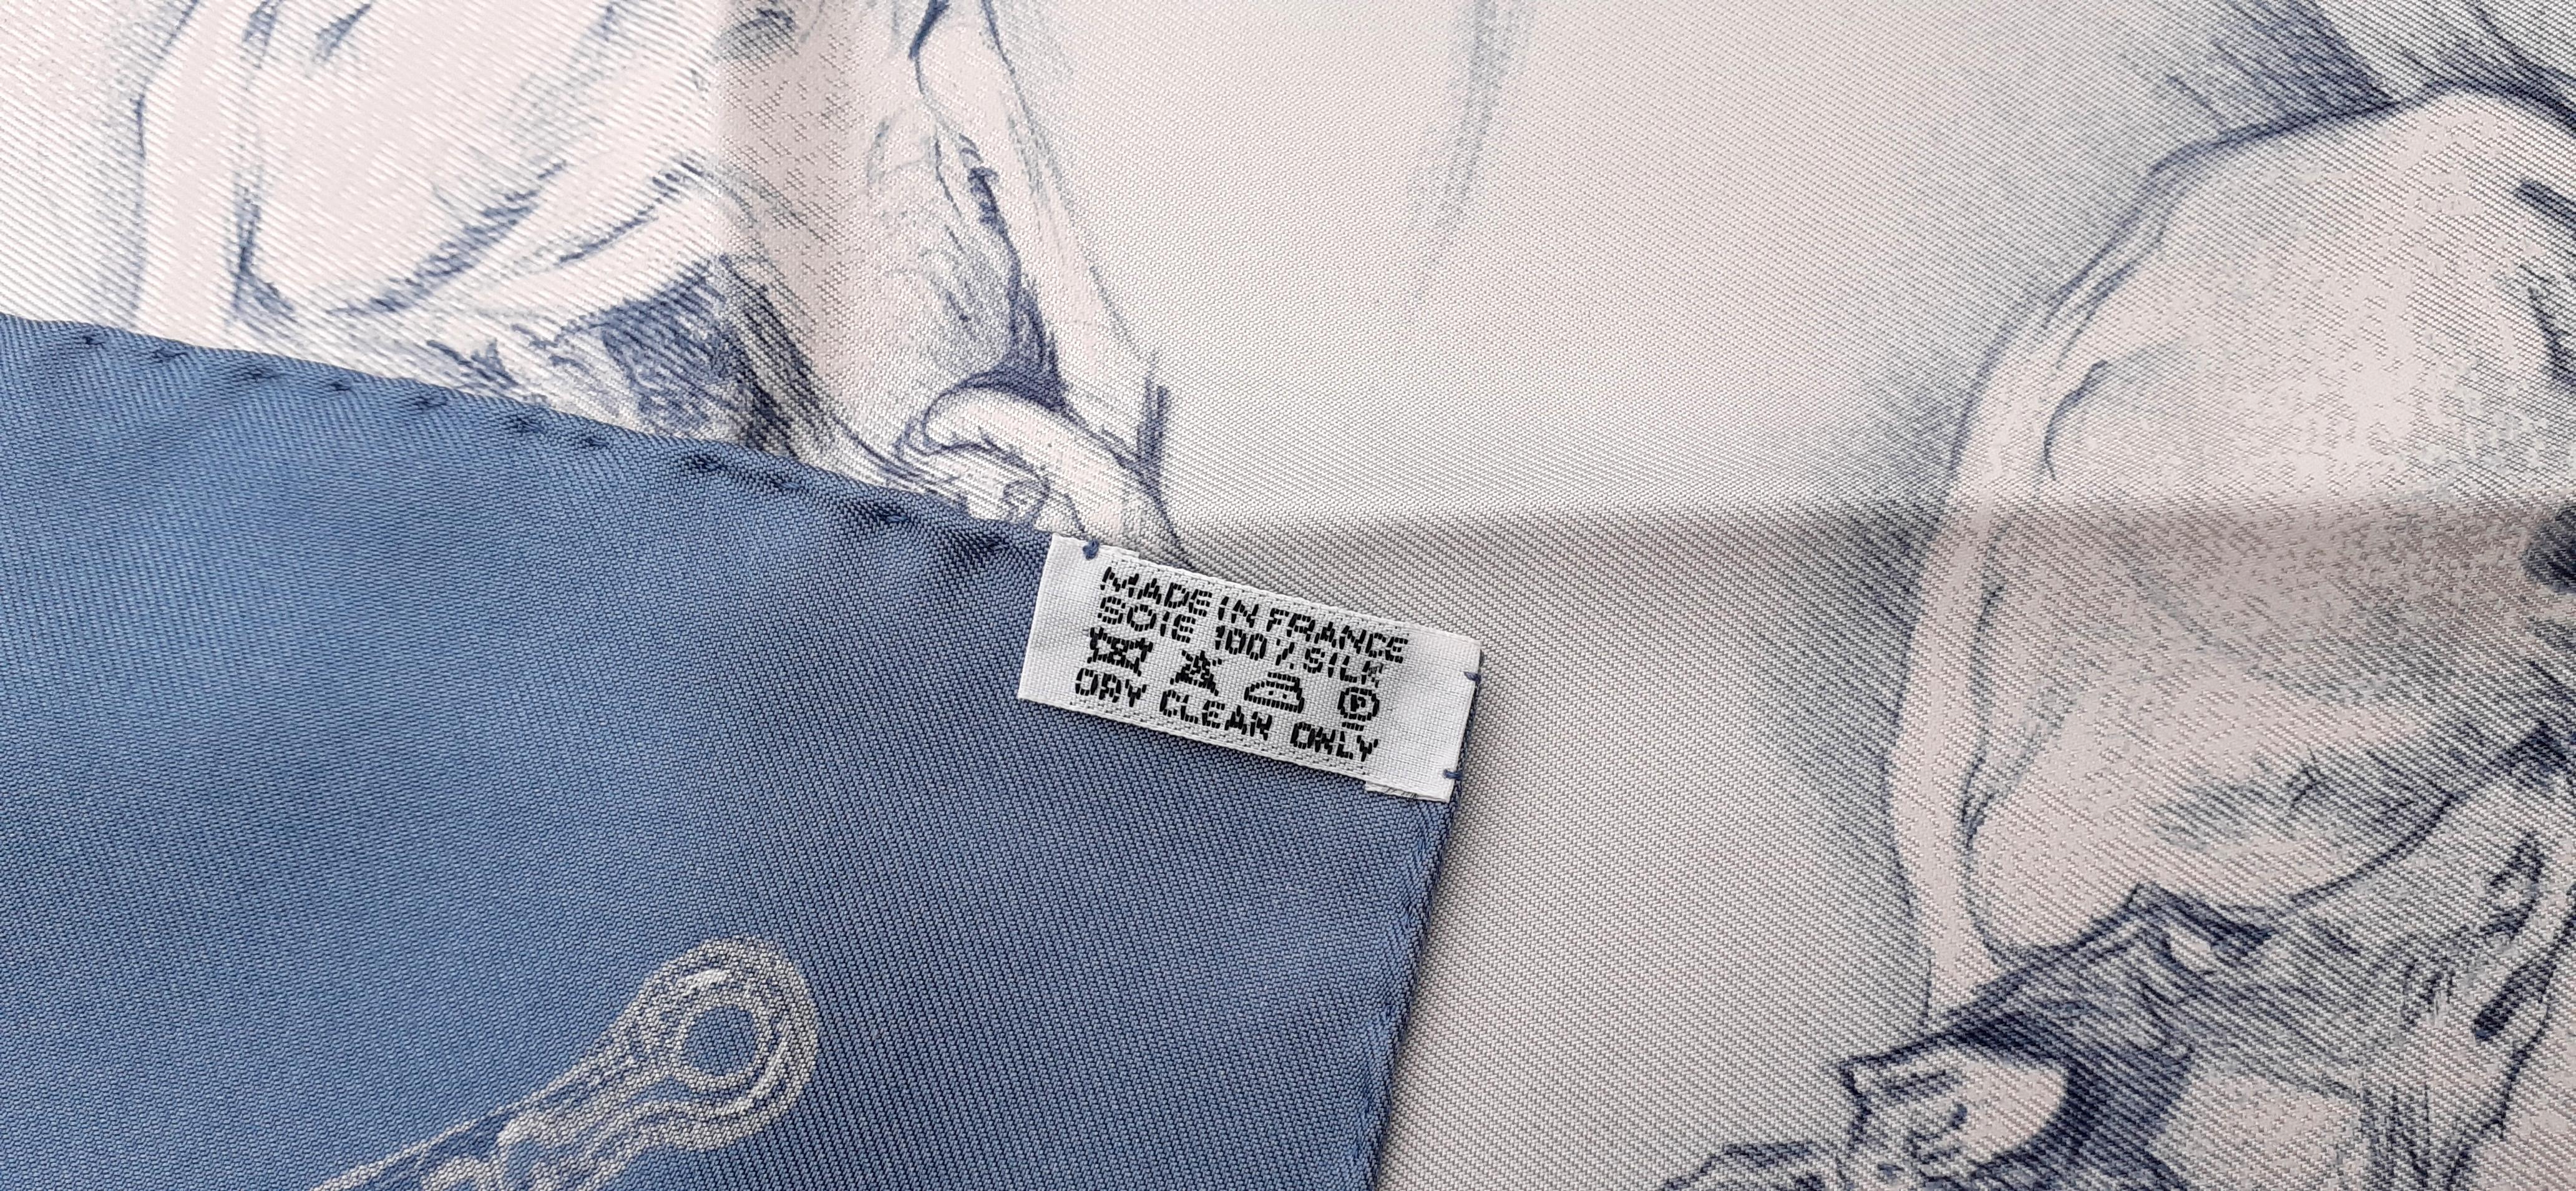 Hermès Silk Scarf Lévriers Greyhound Dogs Xavier de Poret White Blue 90 cm 8